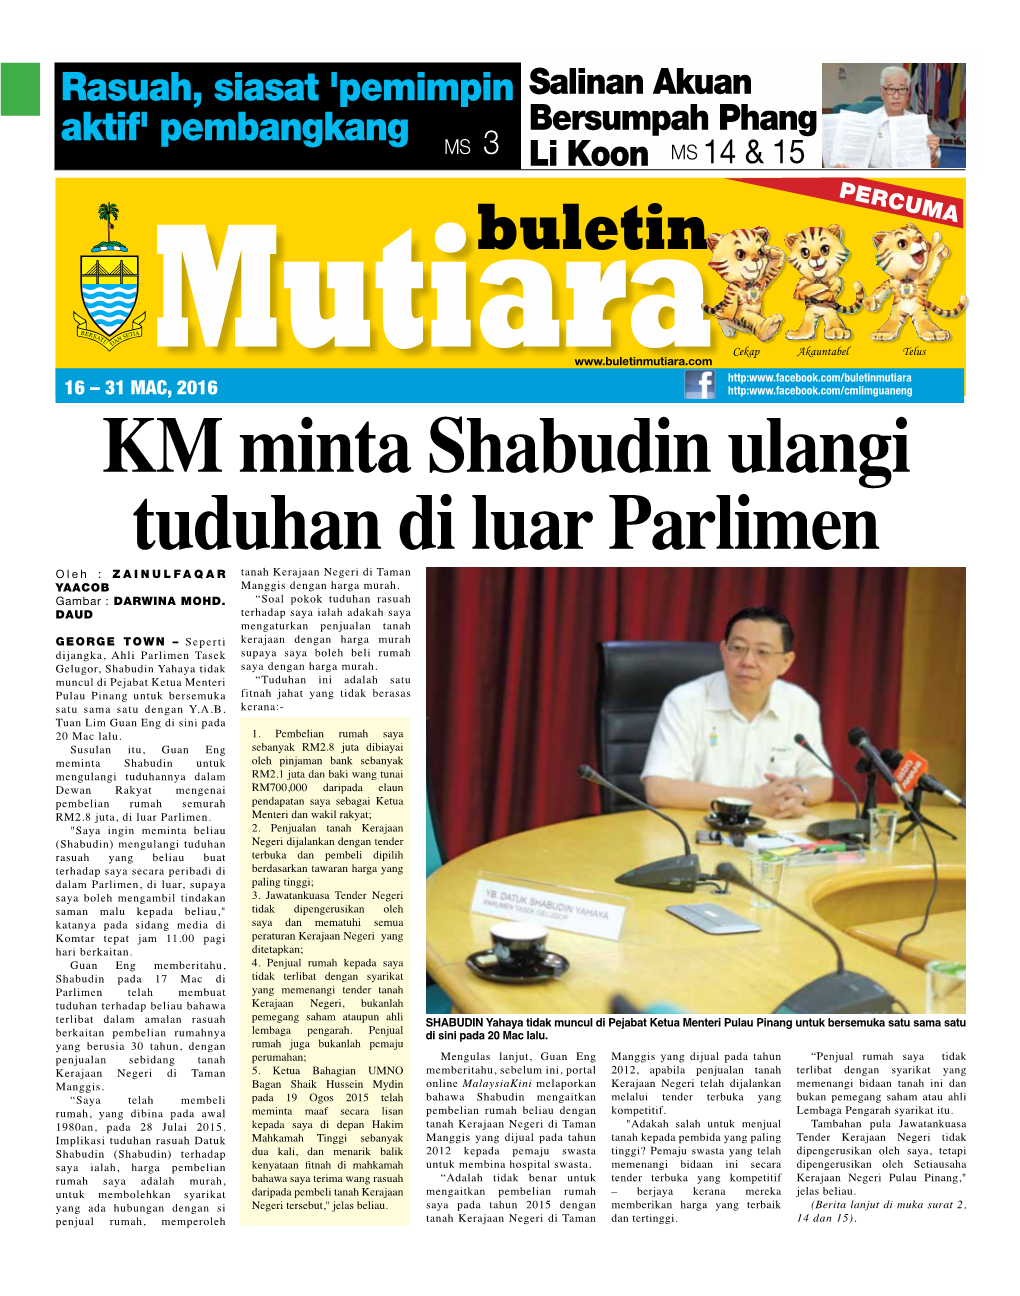 KM Minta Shabudin Ulangi Tuduhan Di Luar Parlimen